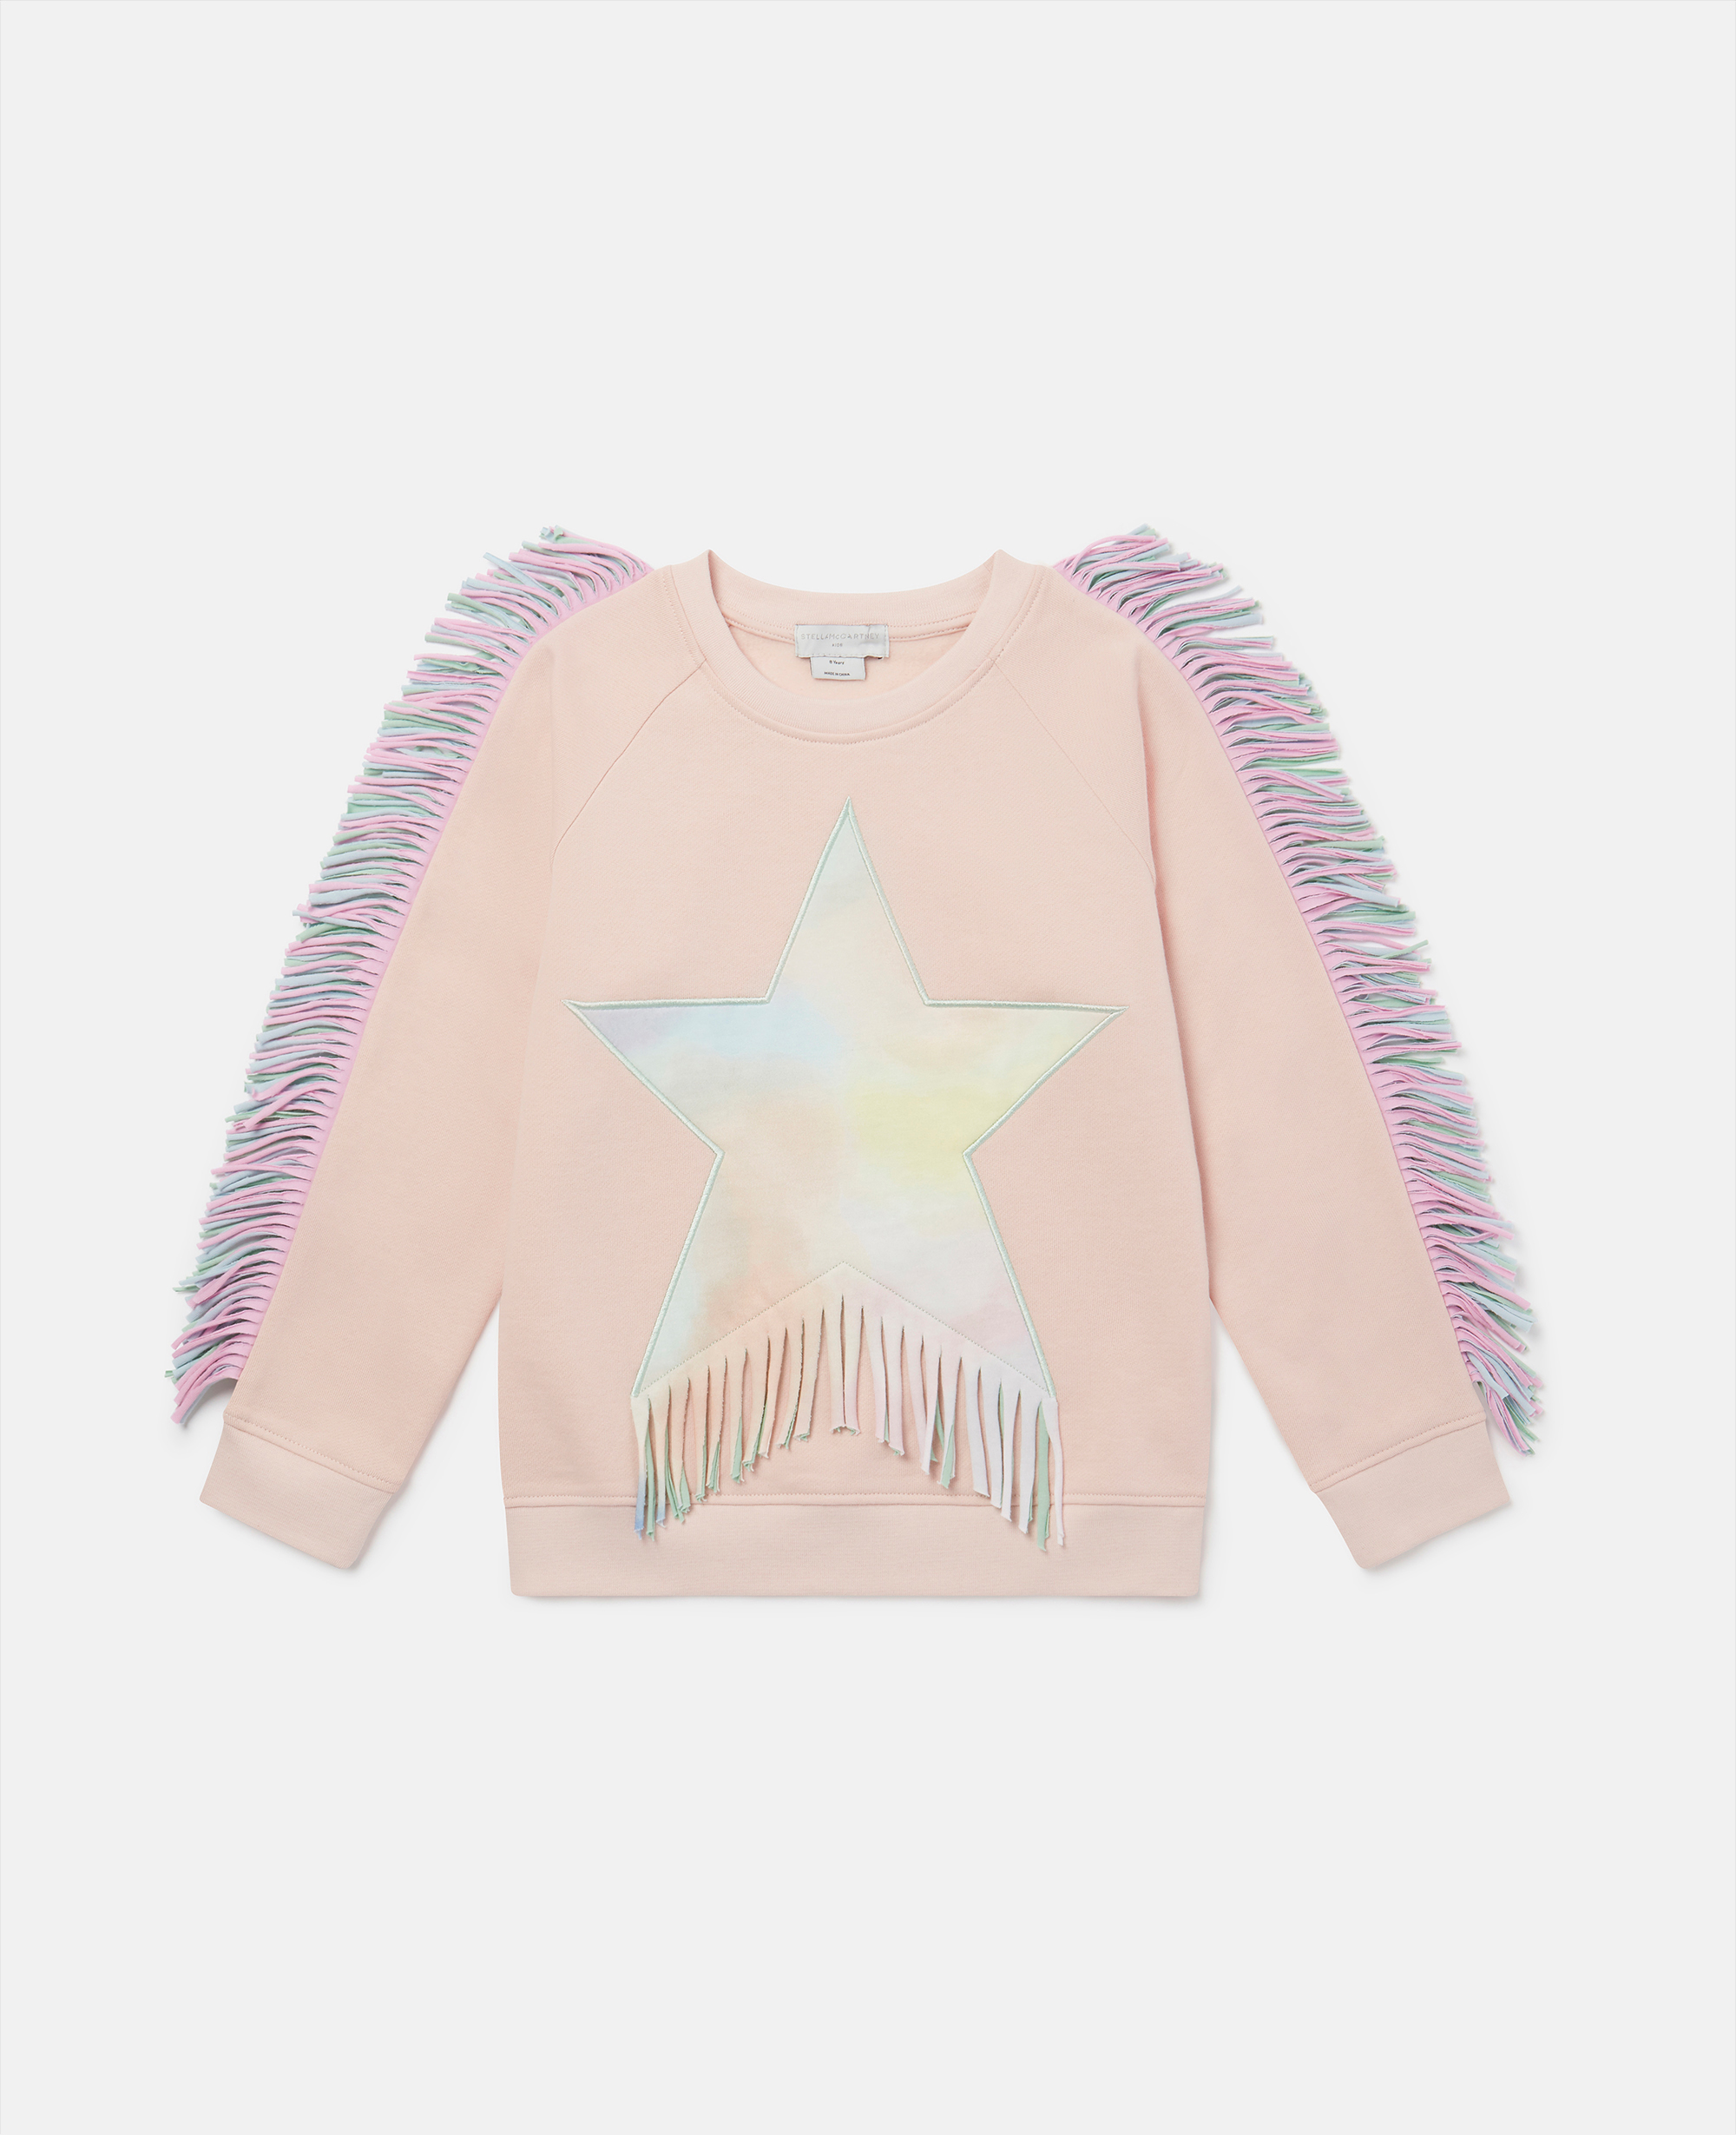 stella mccartney - fringed star sweatshirt, woman, pink, size: 3